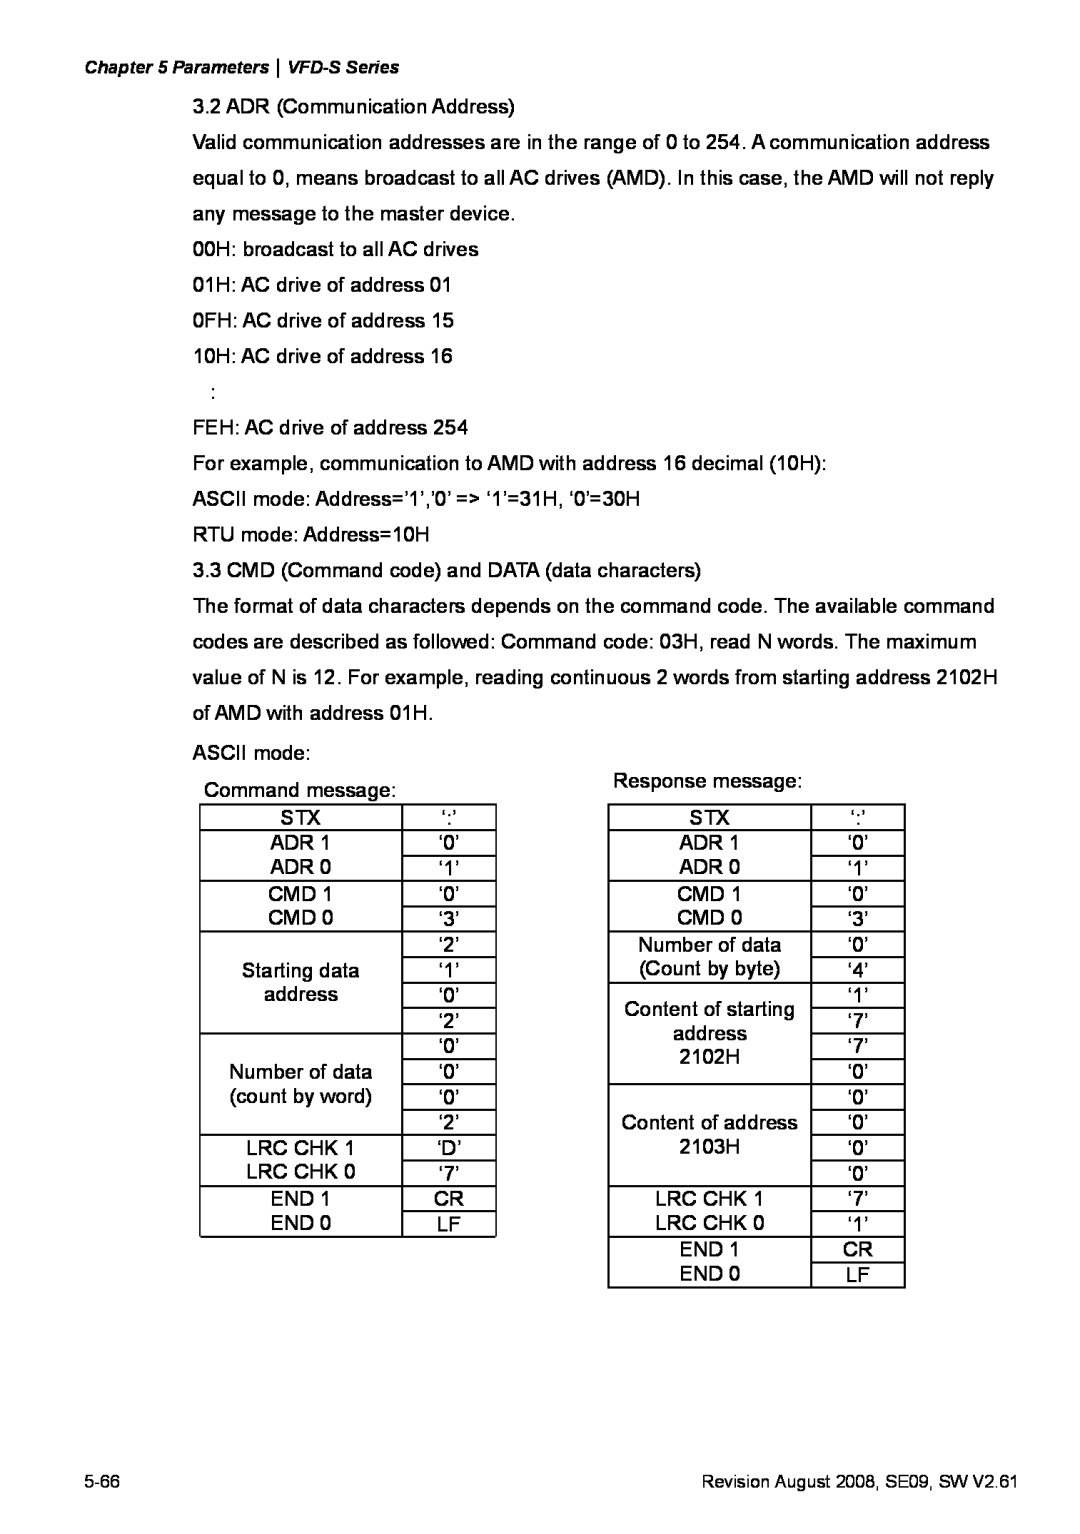 Delta Electronics VFD-S manual ADR Communication Address 